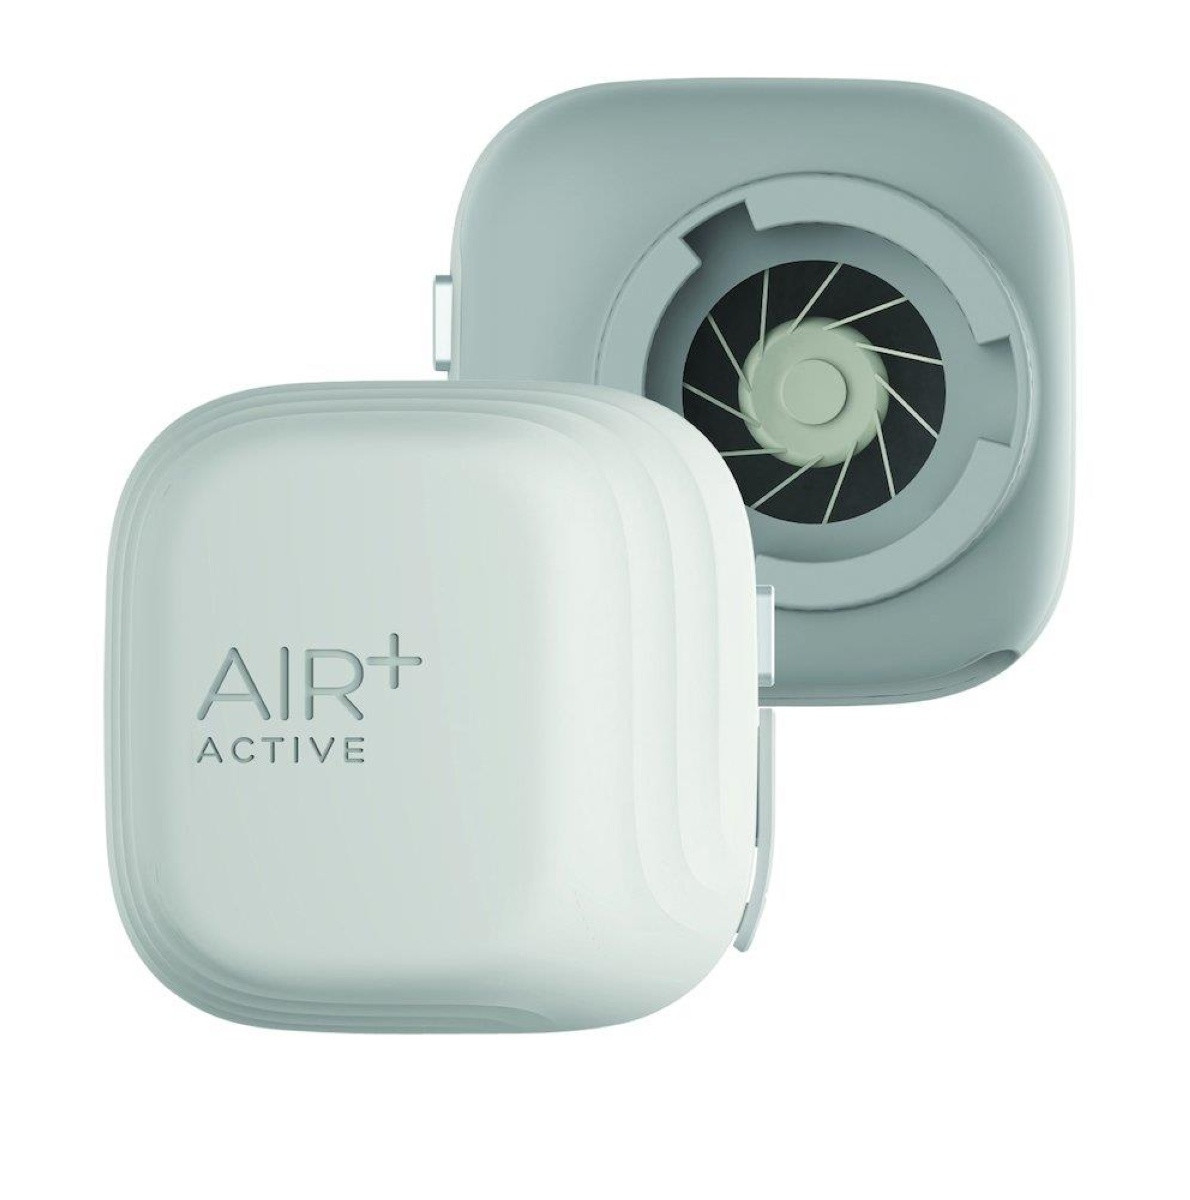 AIR+ Active Ventilator (700090)